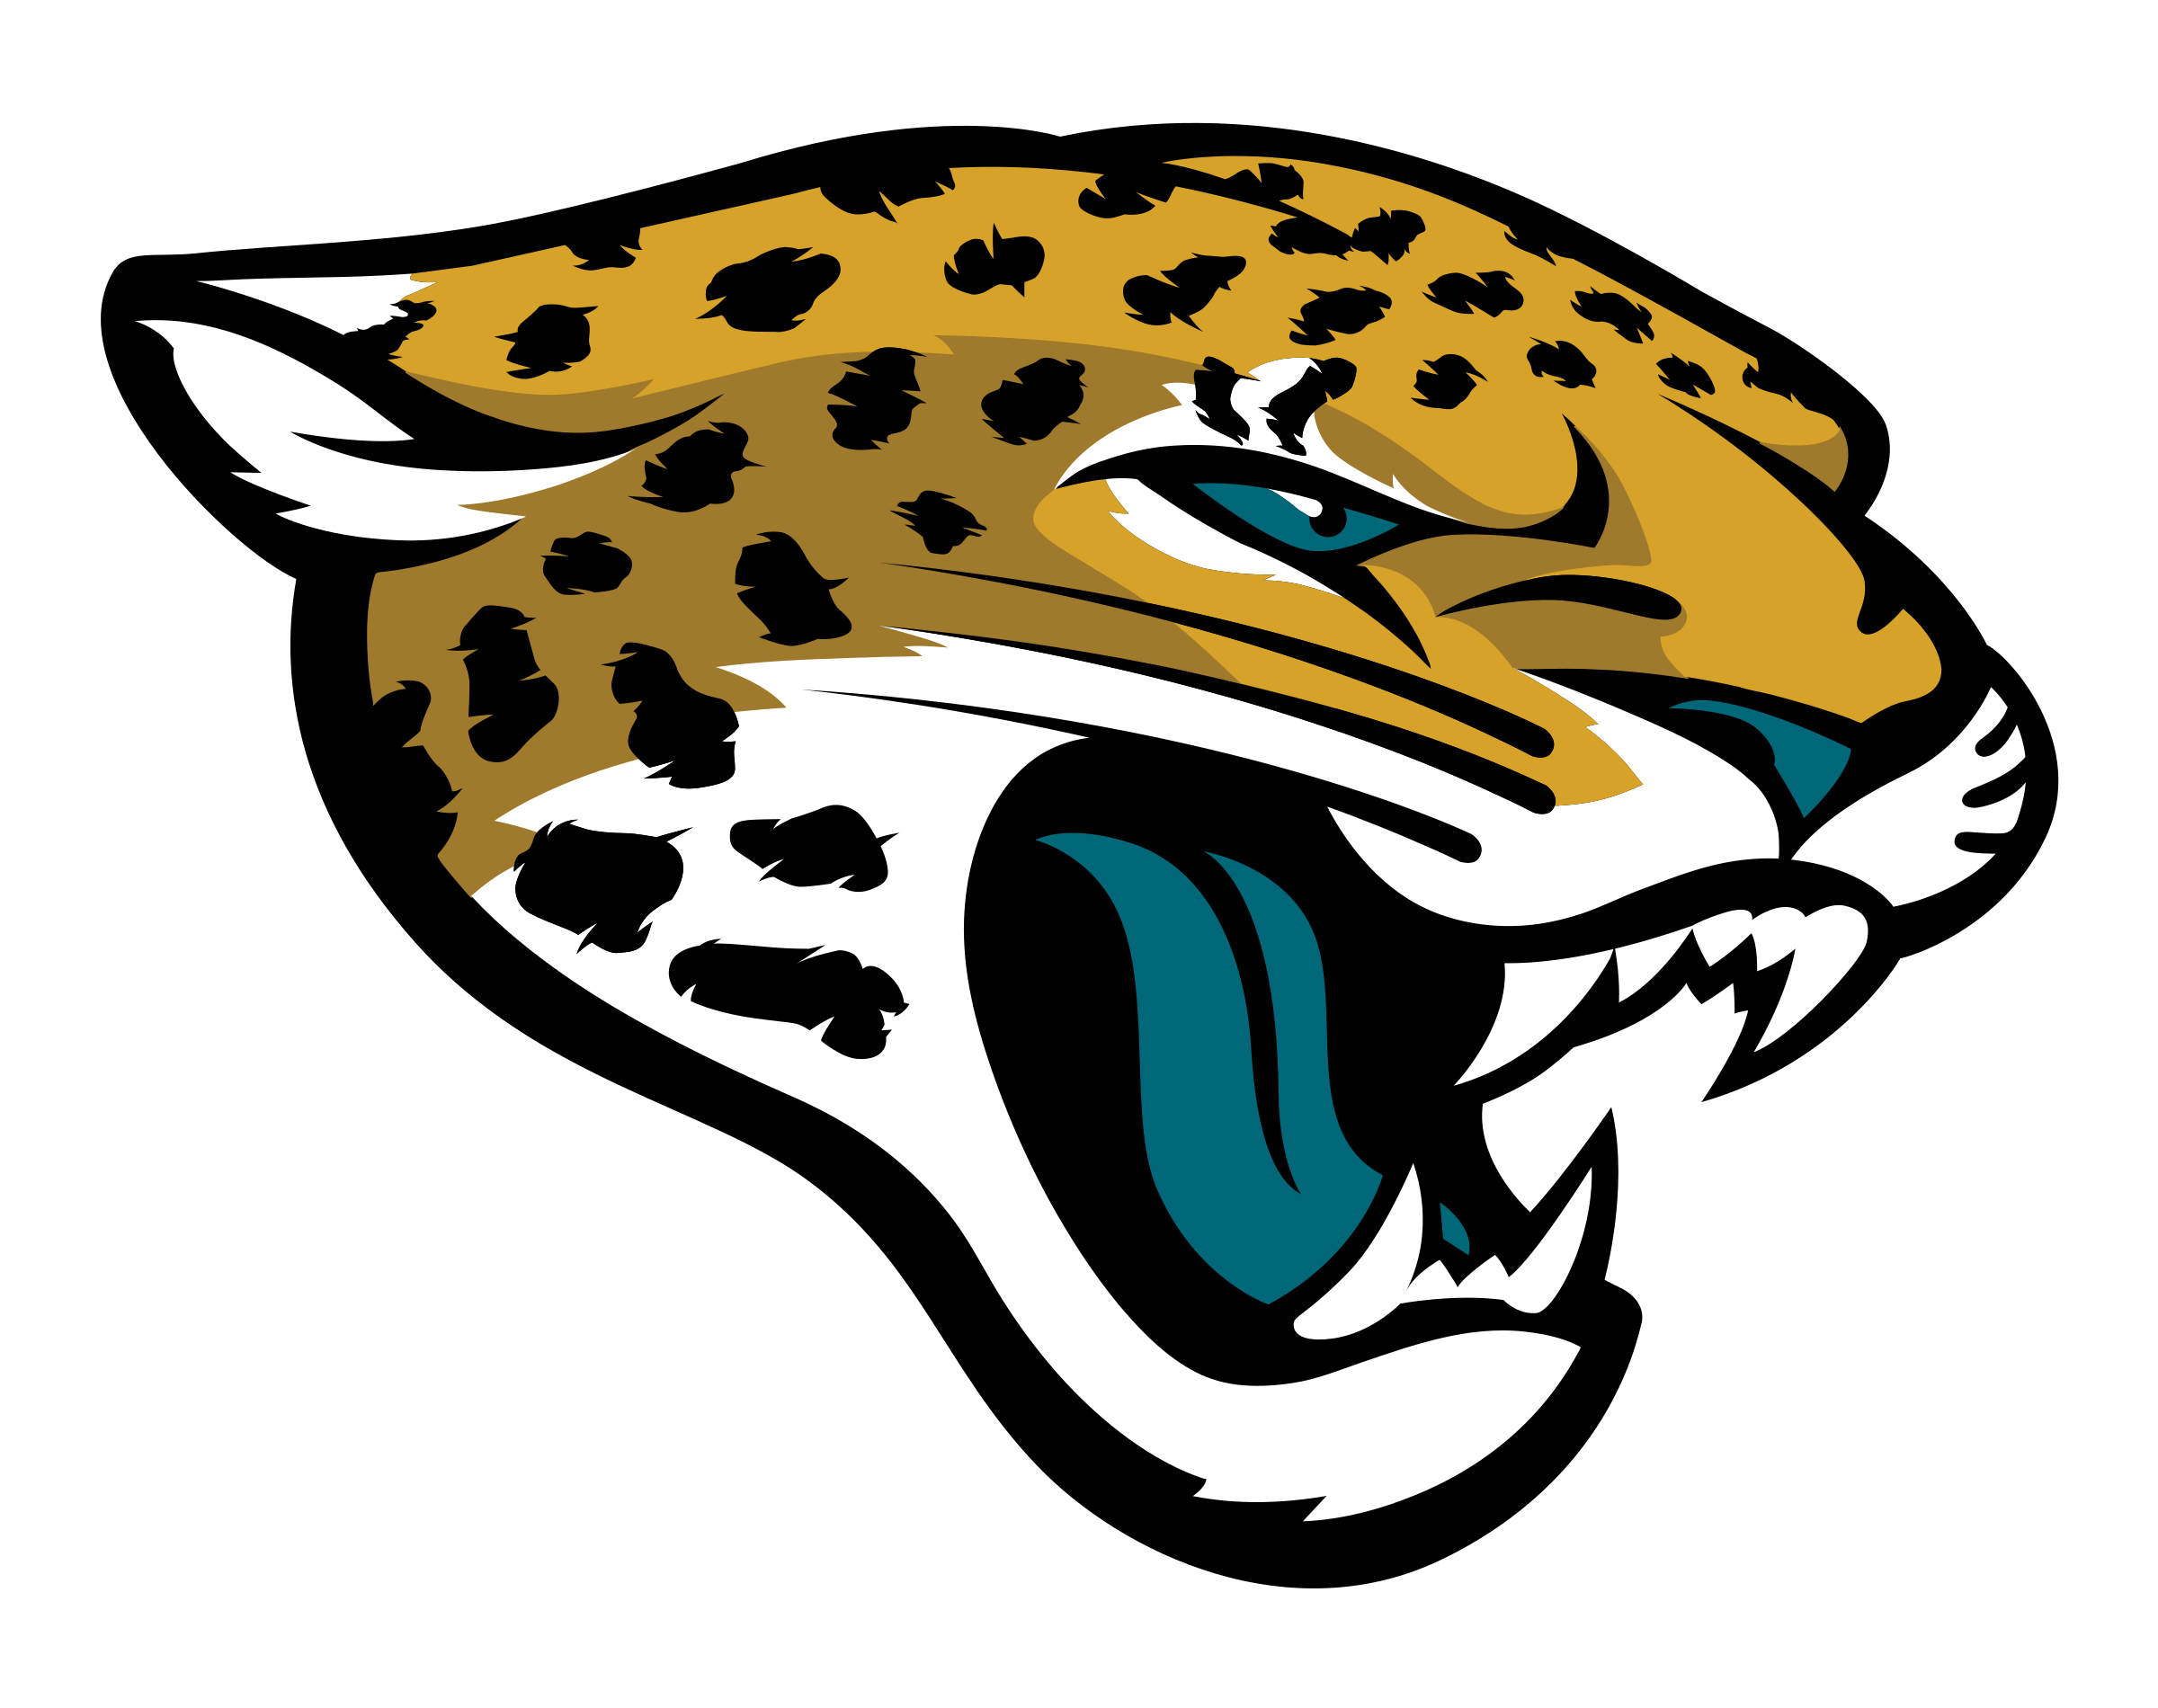 File:Jacksonville Jaguars fir